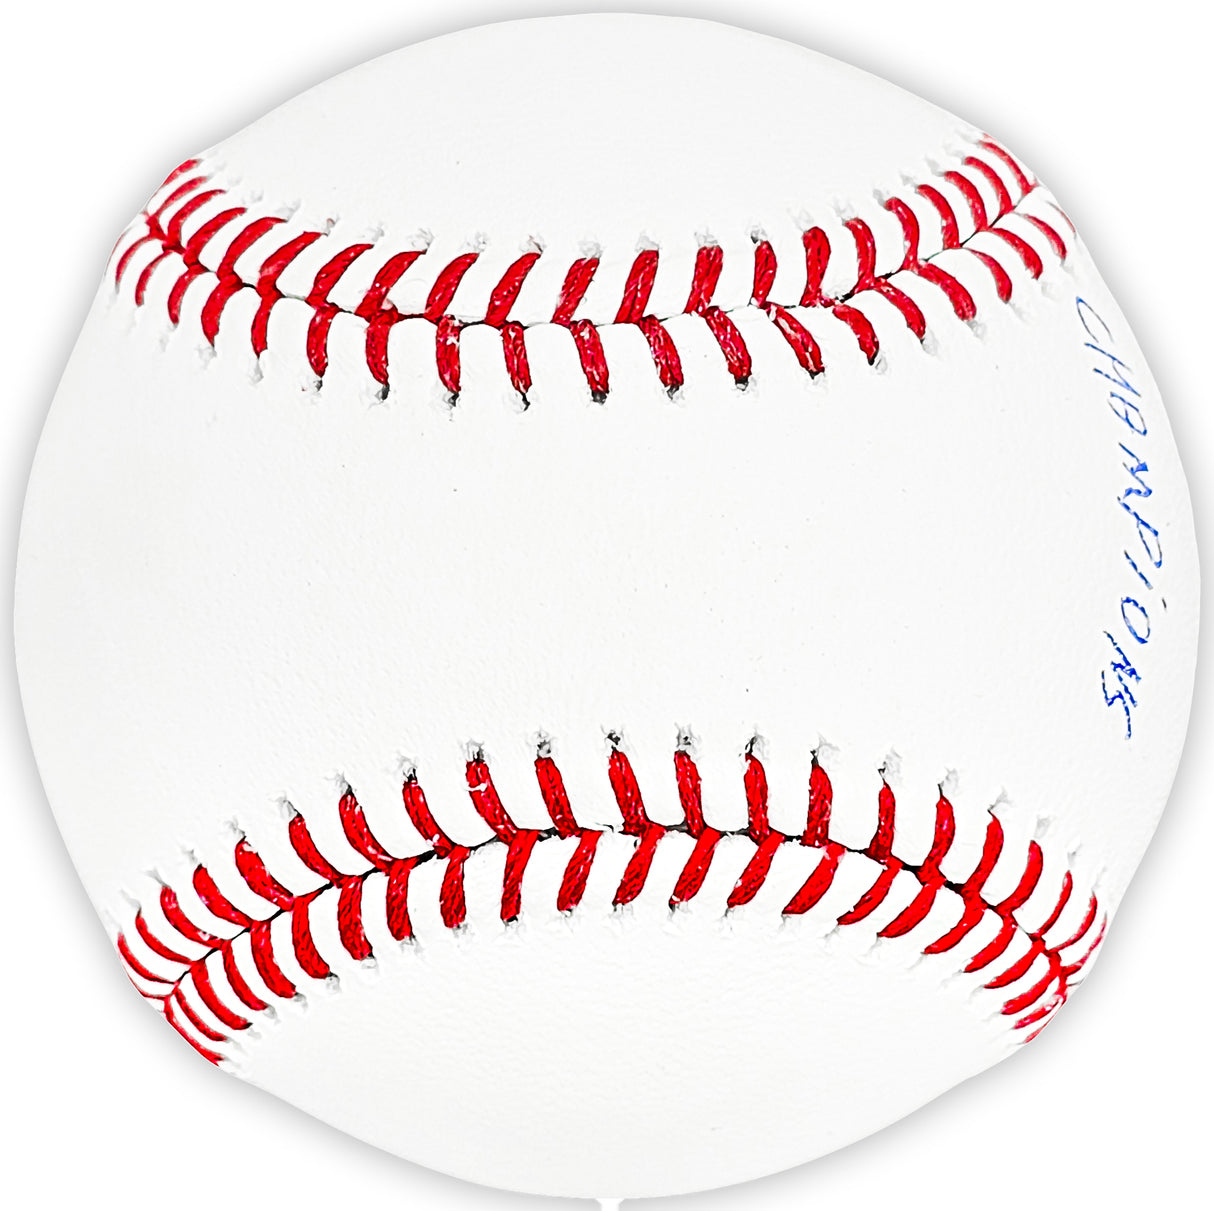 Framber Valdez Autographed Official 2022 World Series MLB Baseball Houston Astros "2022 WS Champions" Beckett BAS Witness Stock #215402